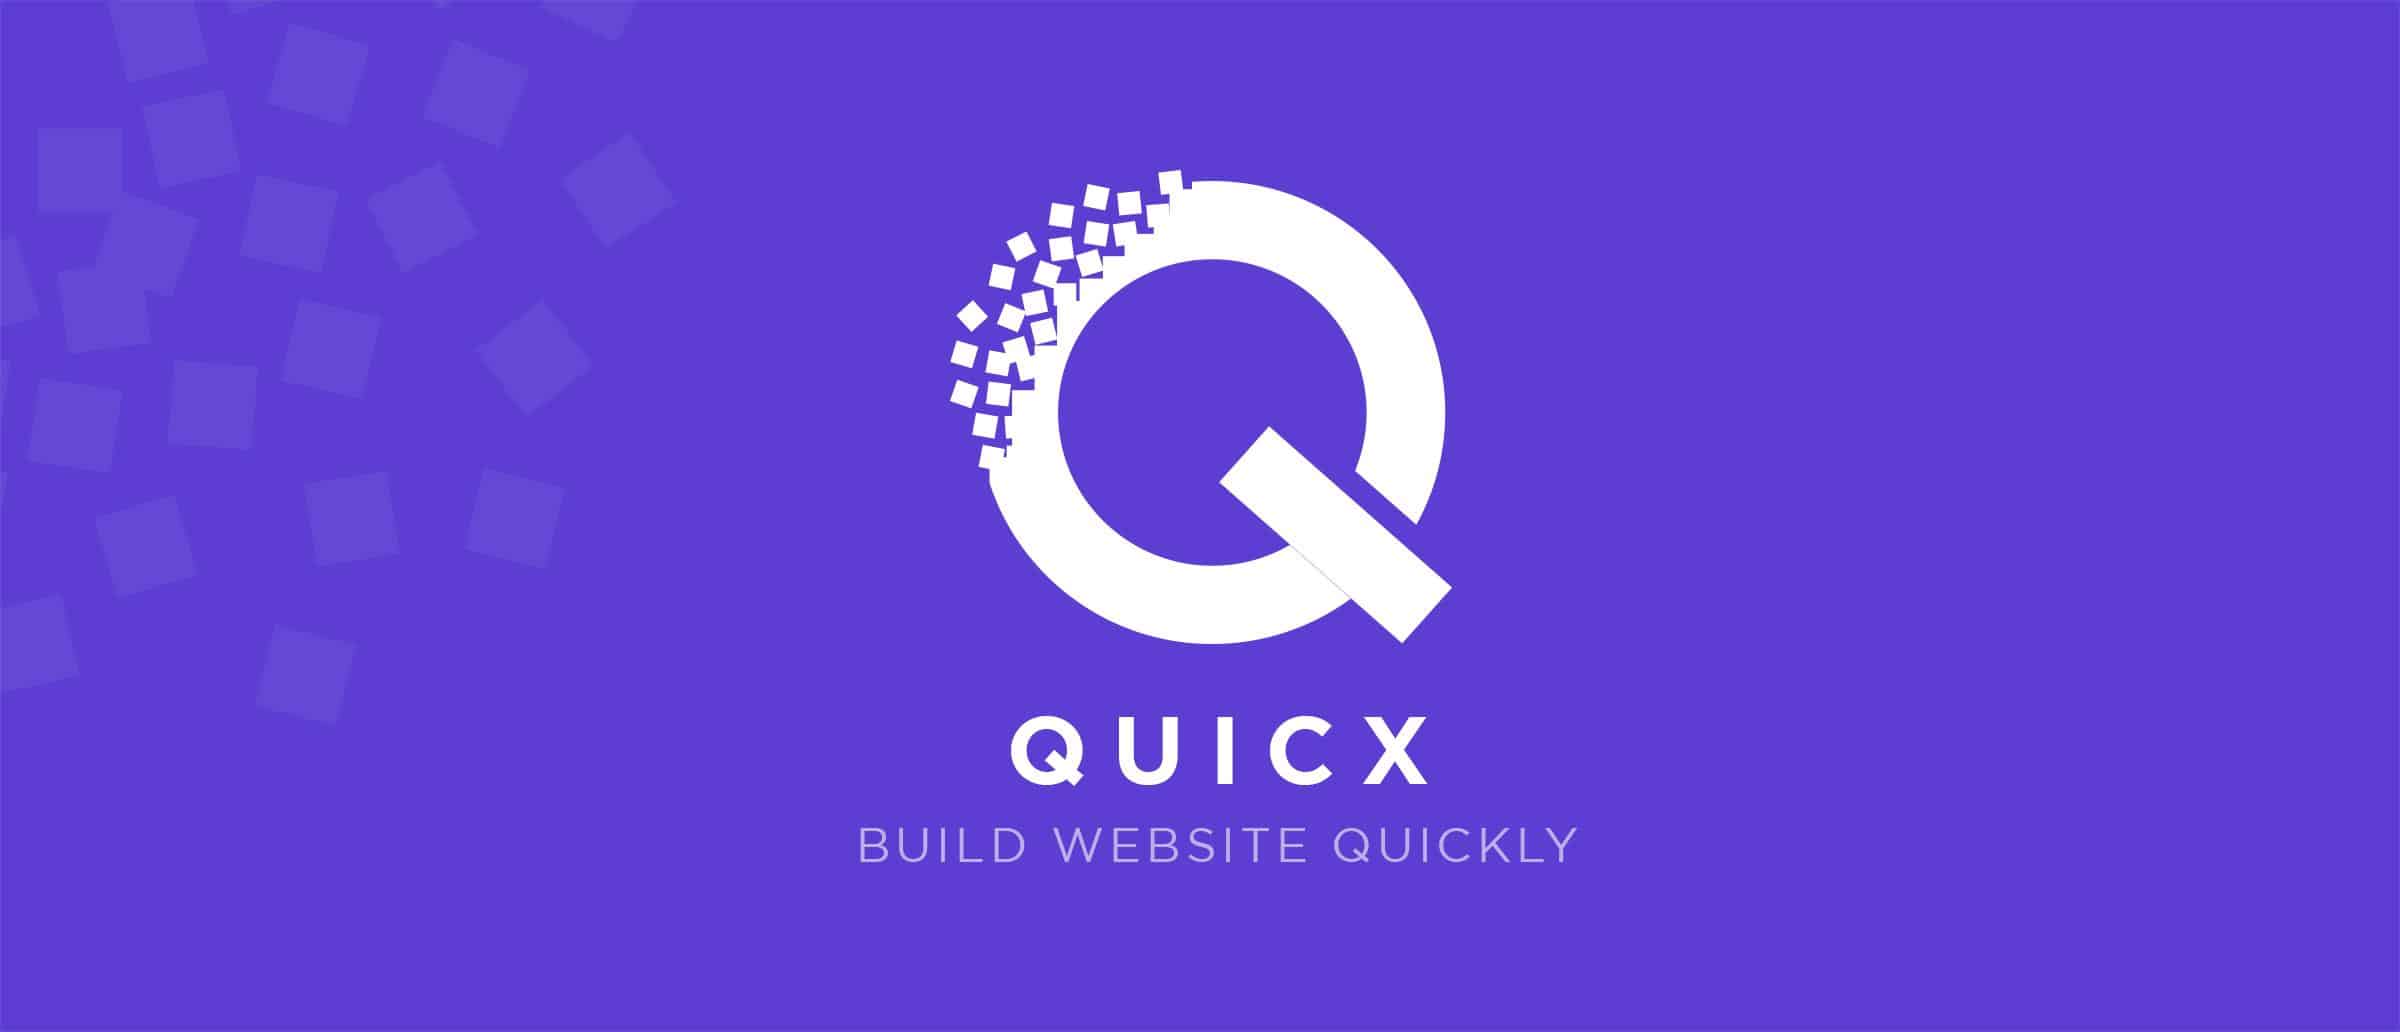 Quix RC1 Has Arrived - More Elements, Performance Improvements and Developer Friendly